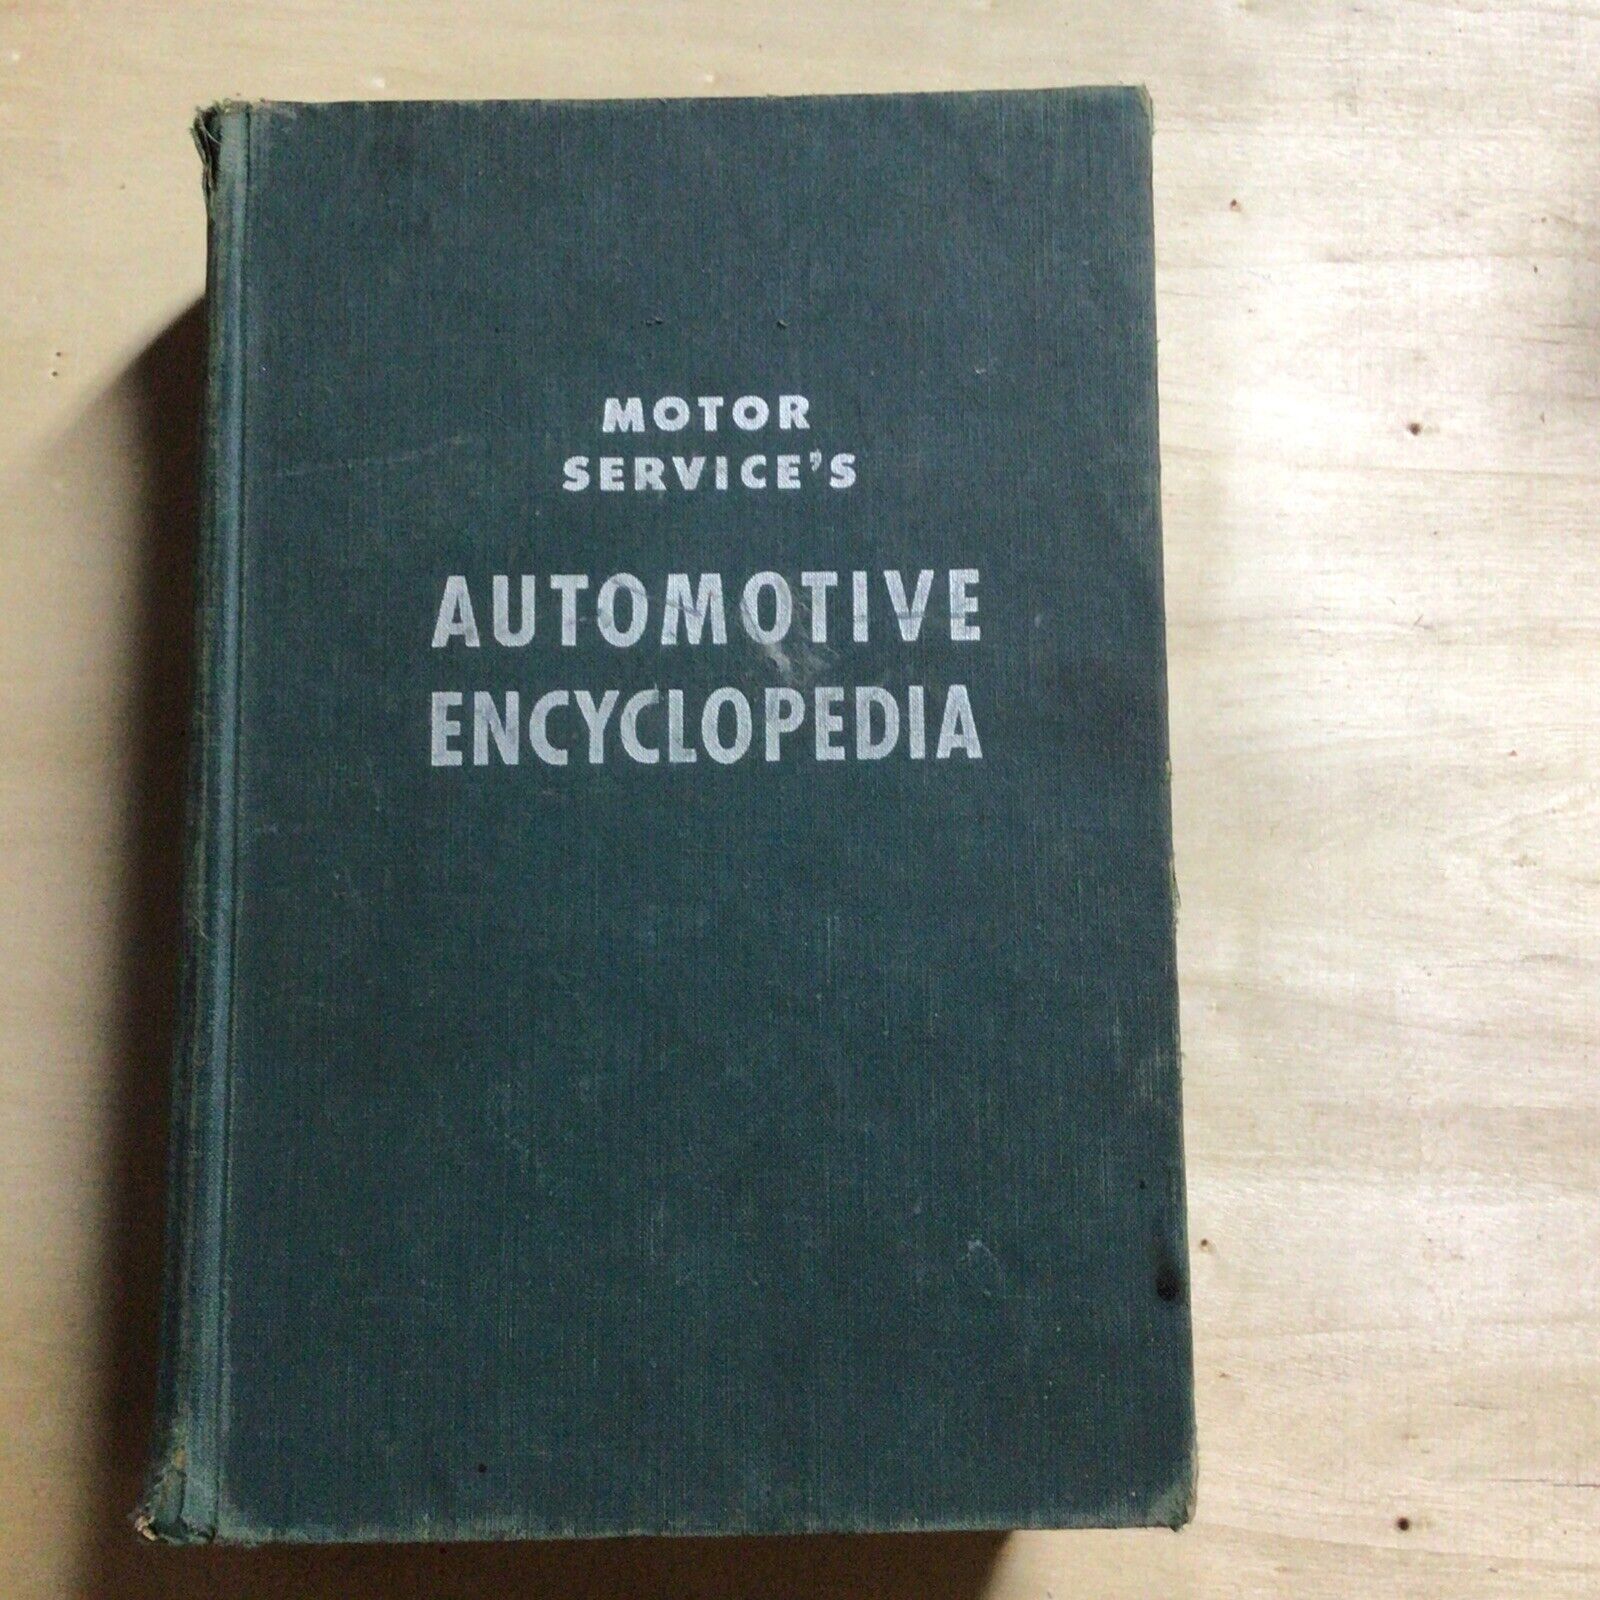 Vintage Motor Service's Automotive Encyclopedia 1958 Hard Cover Illustrations 